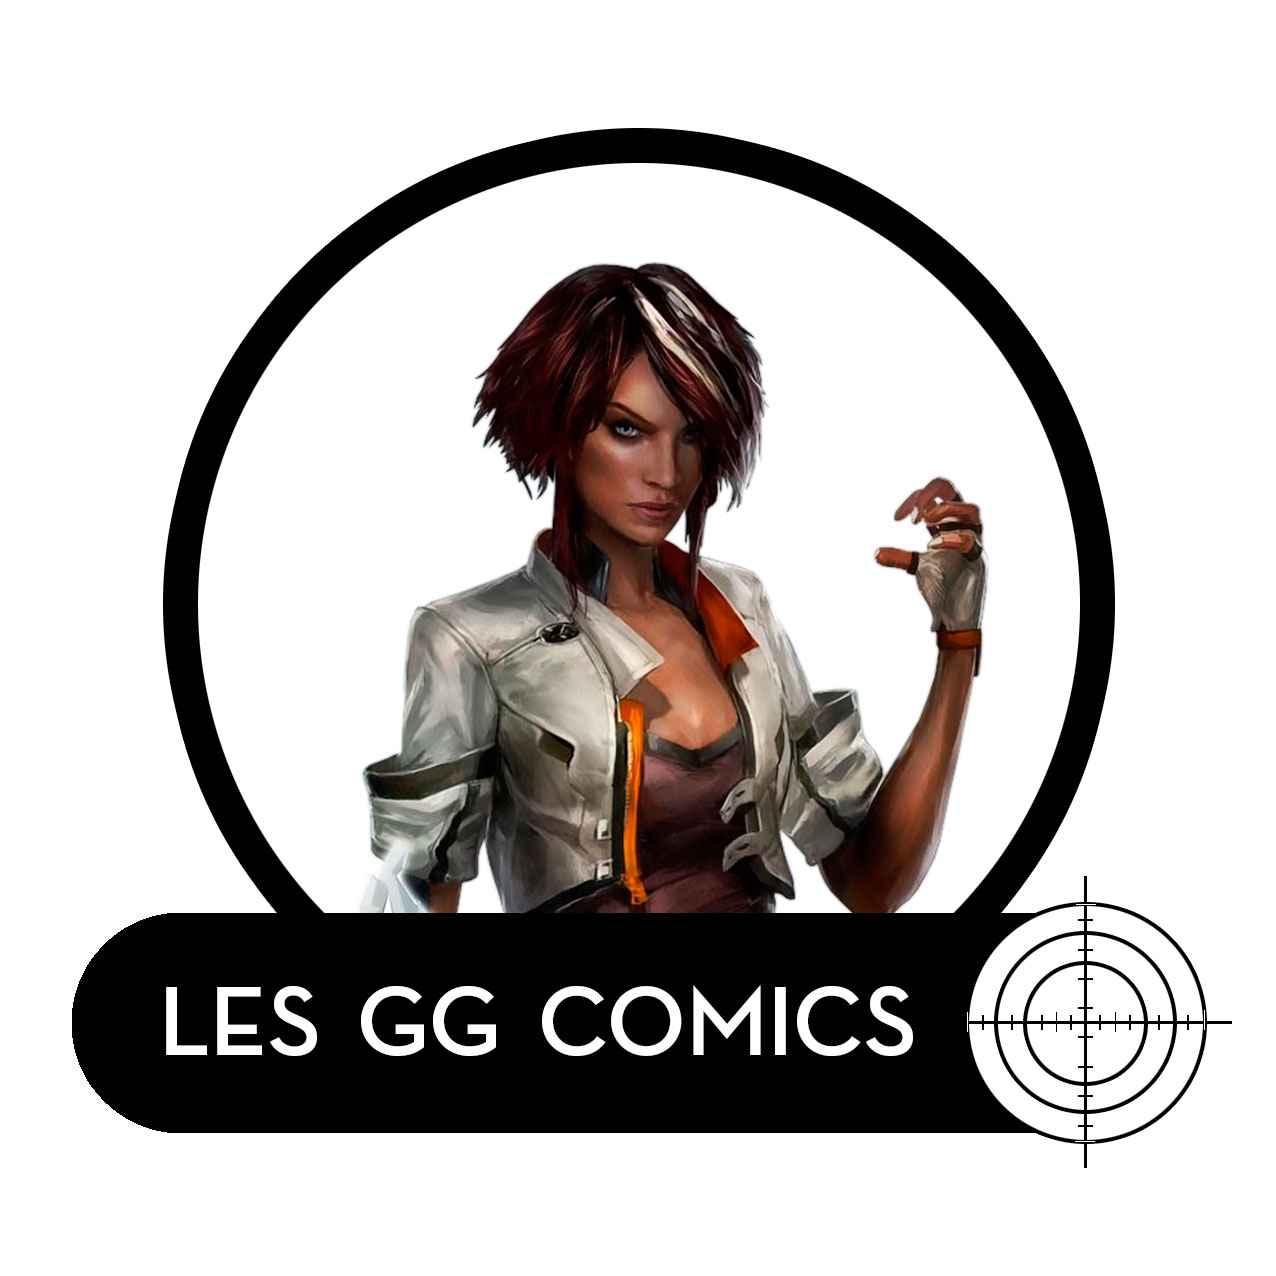 Les GG comics - HS6 : ITW d’Aleksi Briclot [Comic Con Paris 2019]